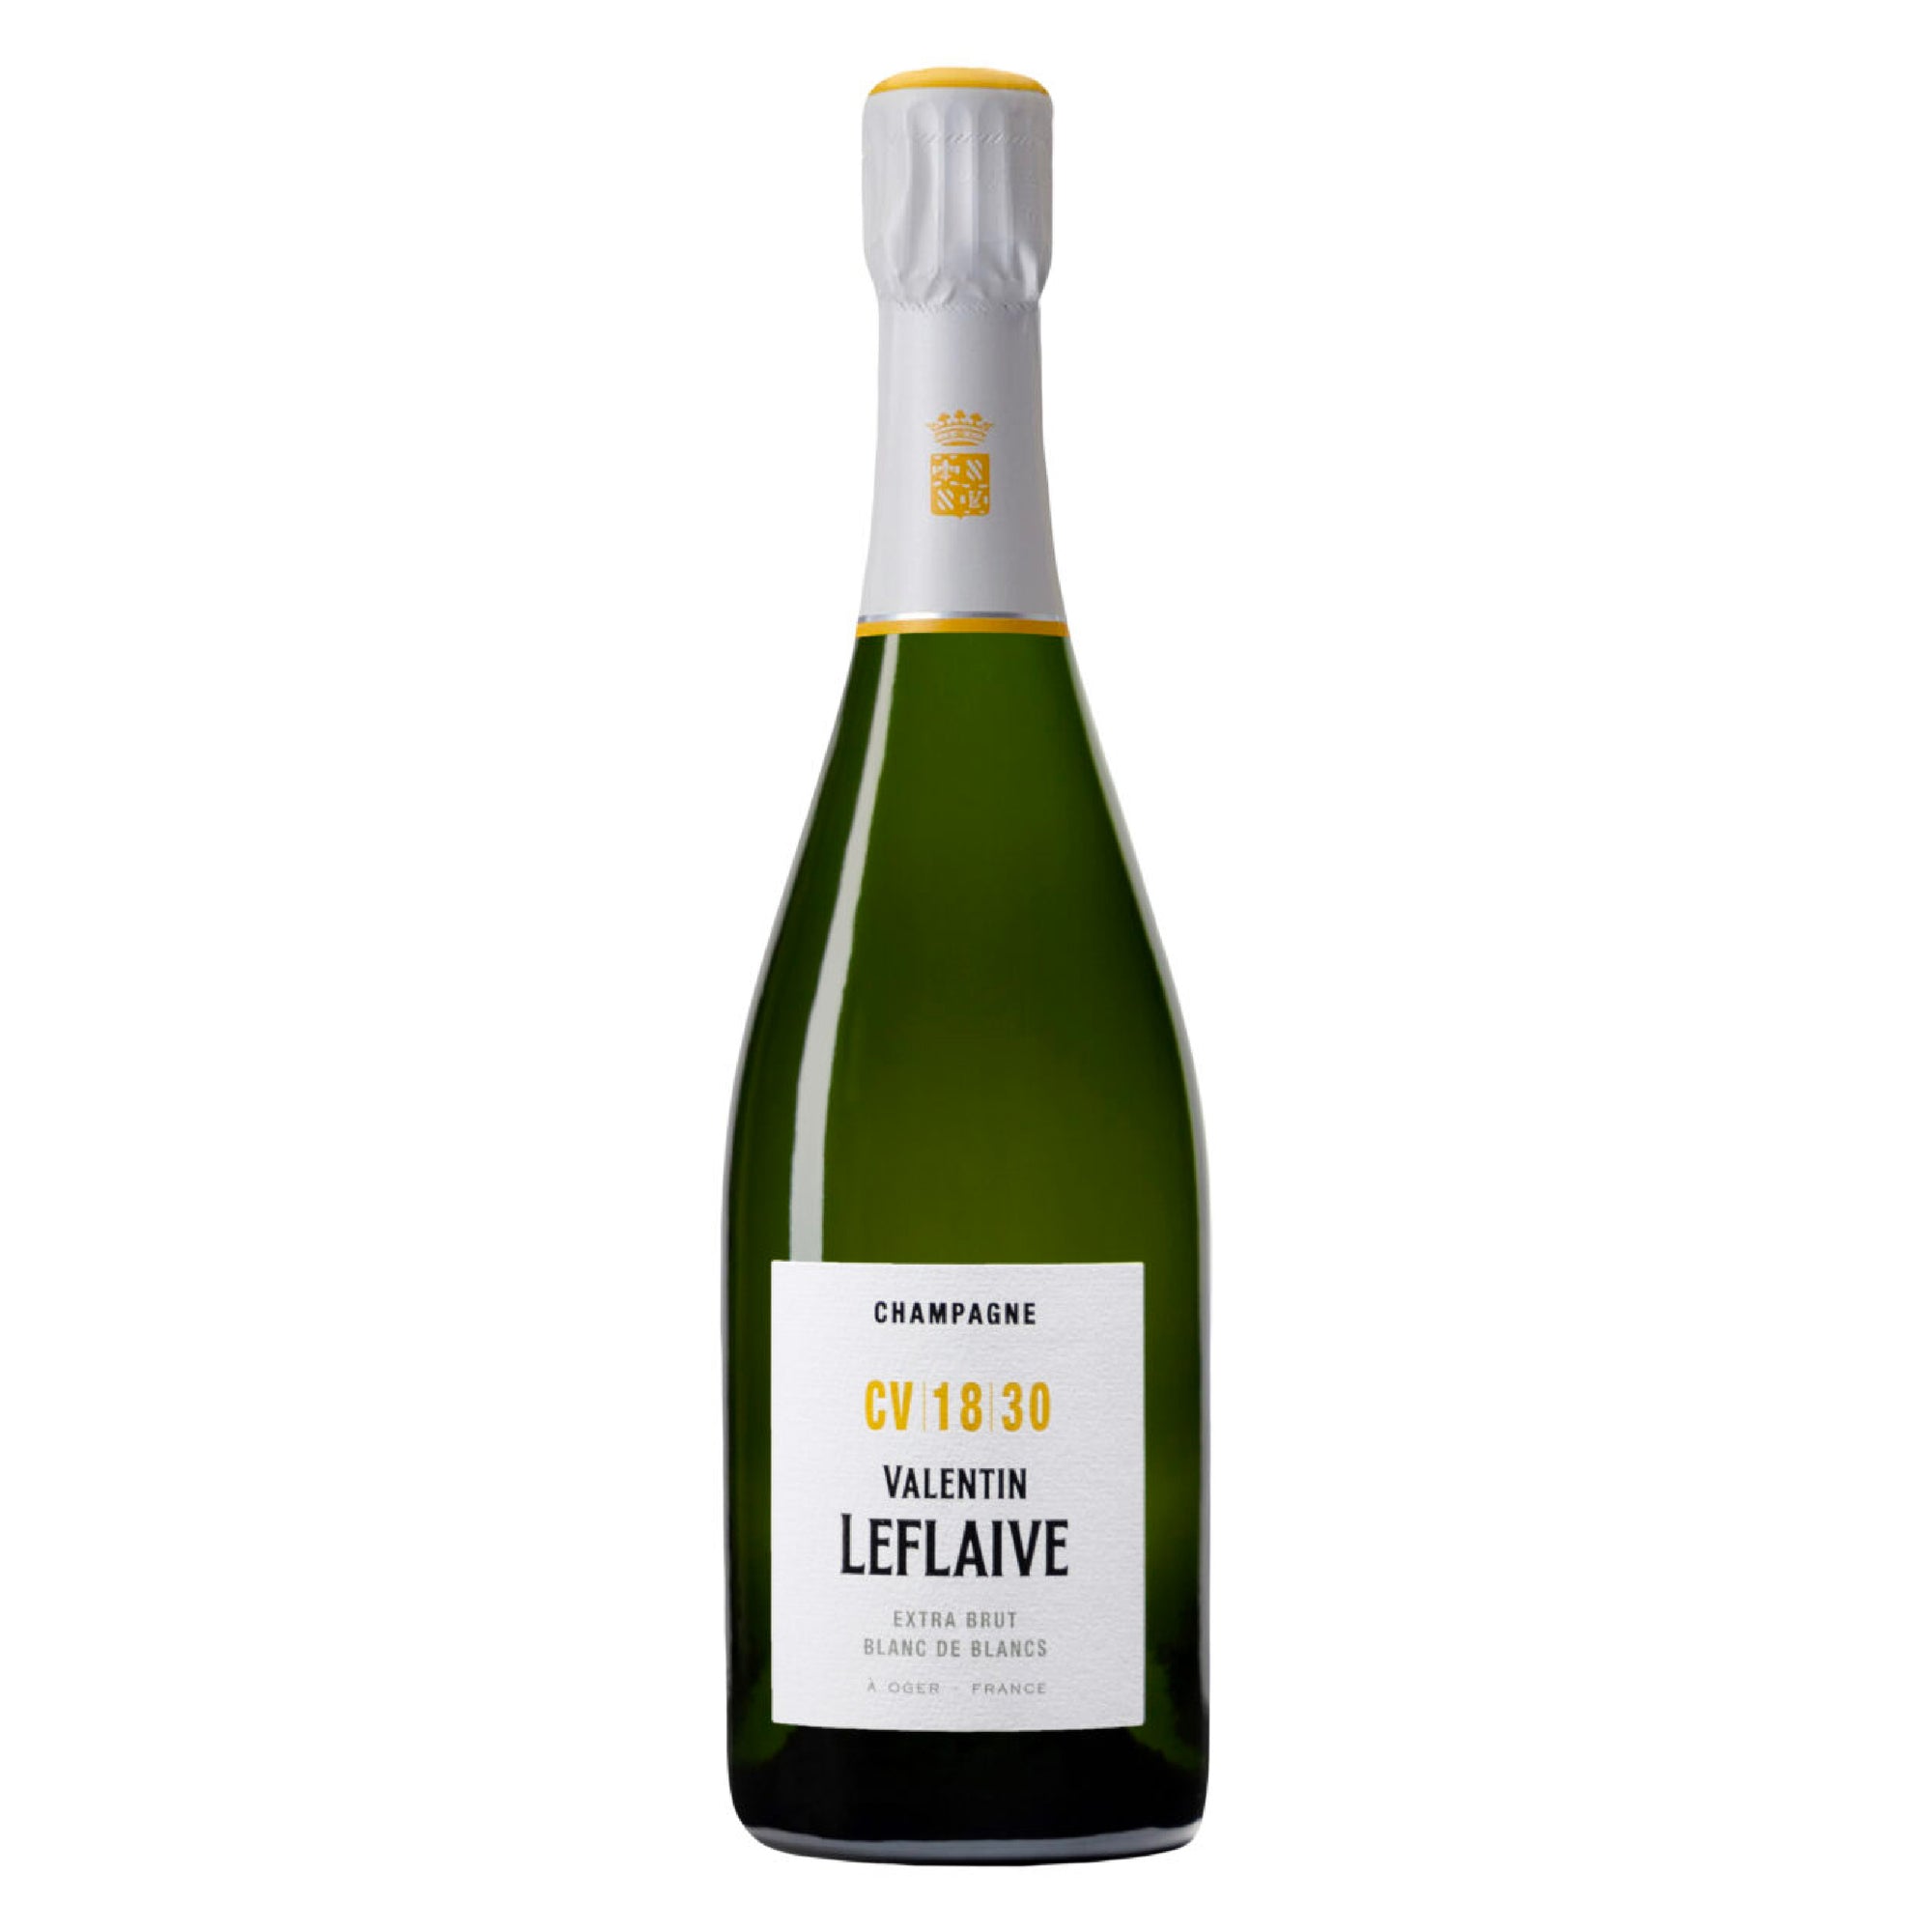 VALENTIN LEFLAIVE Champagne Extra Brut "CV 18 30" Blanc de Blancs NV